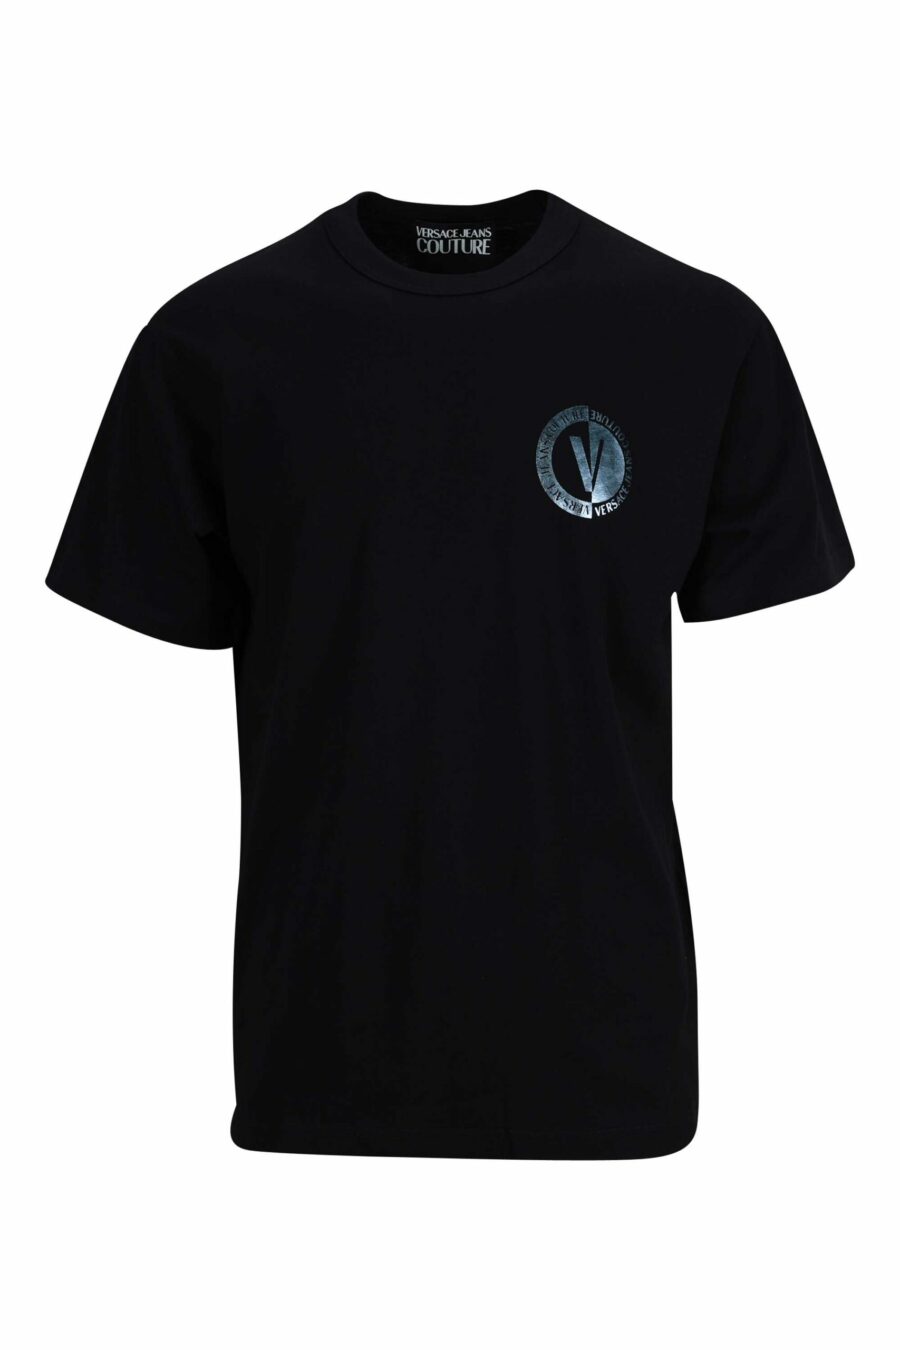 T-shirt noir avec mini-logo circulaire bleu métallisé - 8052019402216 scaled